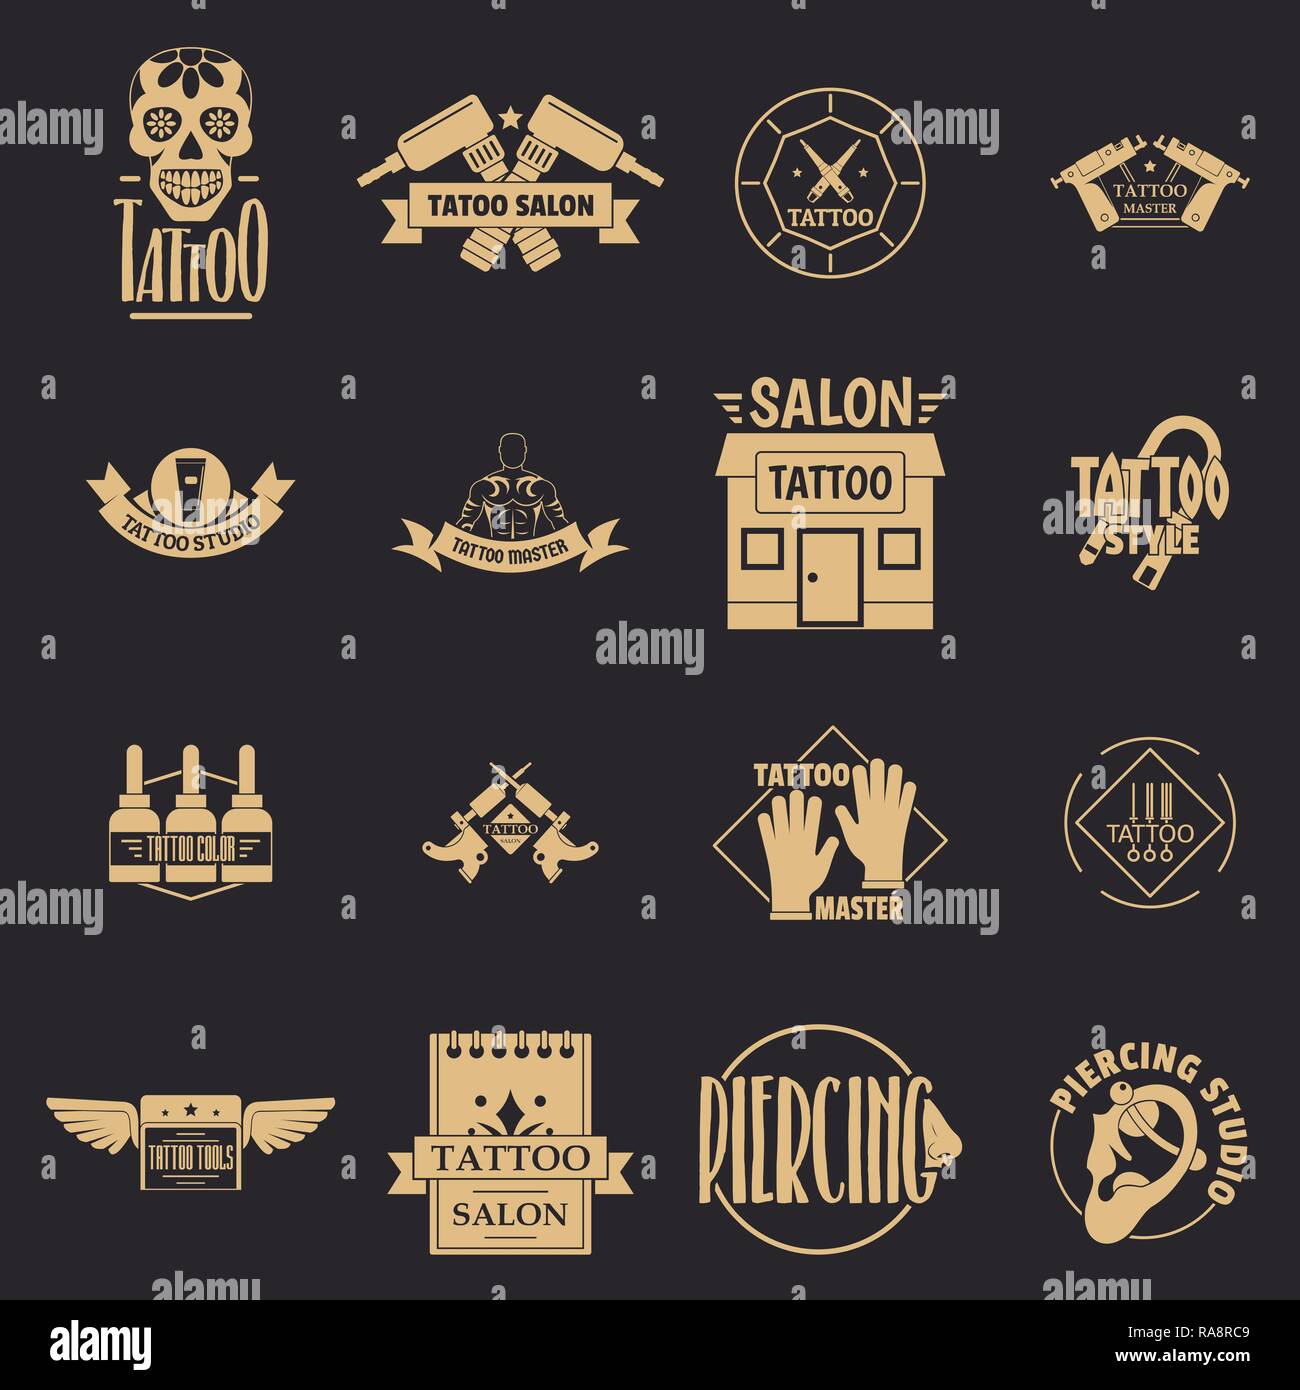 Tattoo artist logo | Logo design contest | 99designs